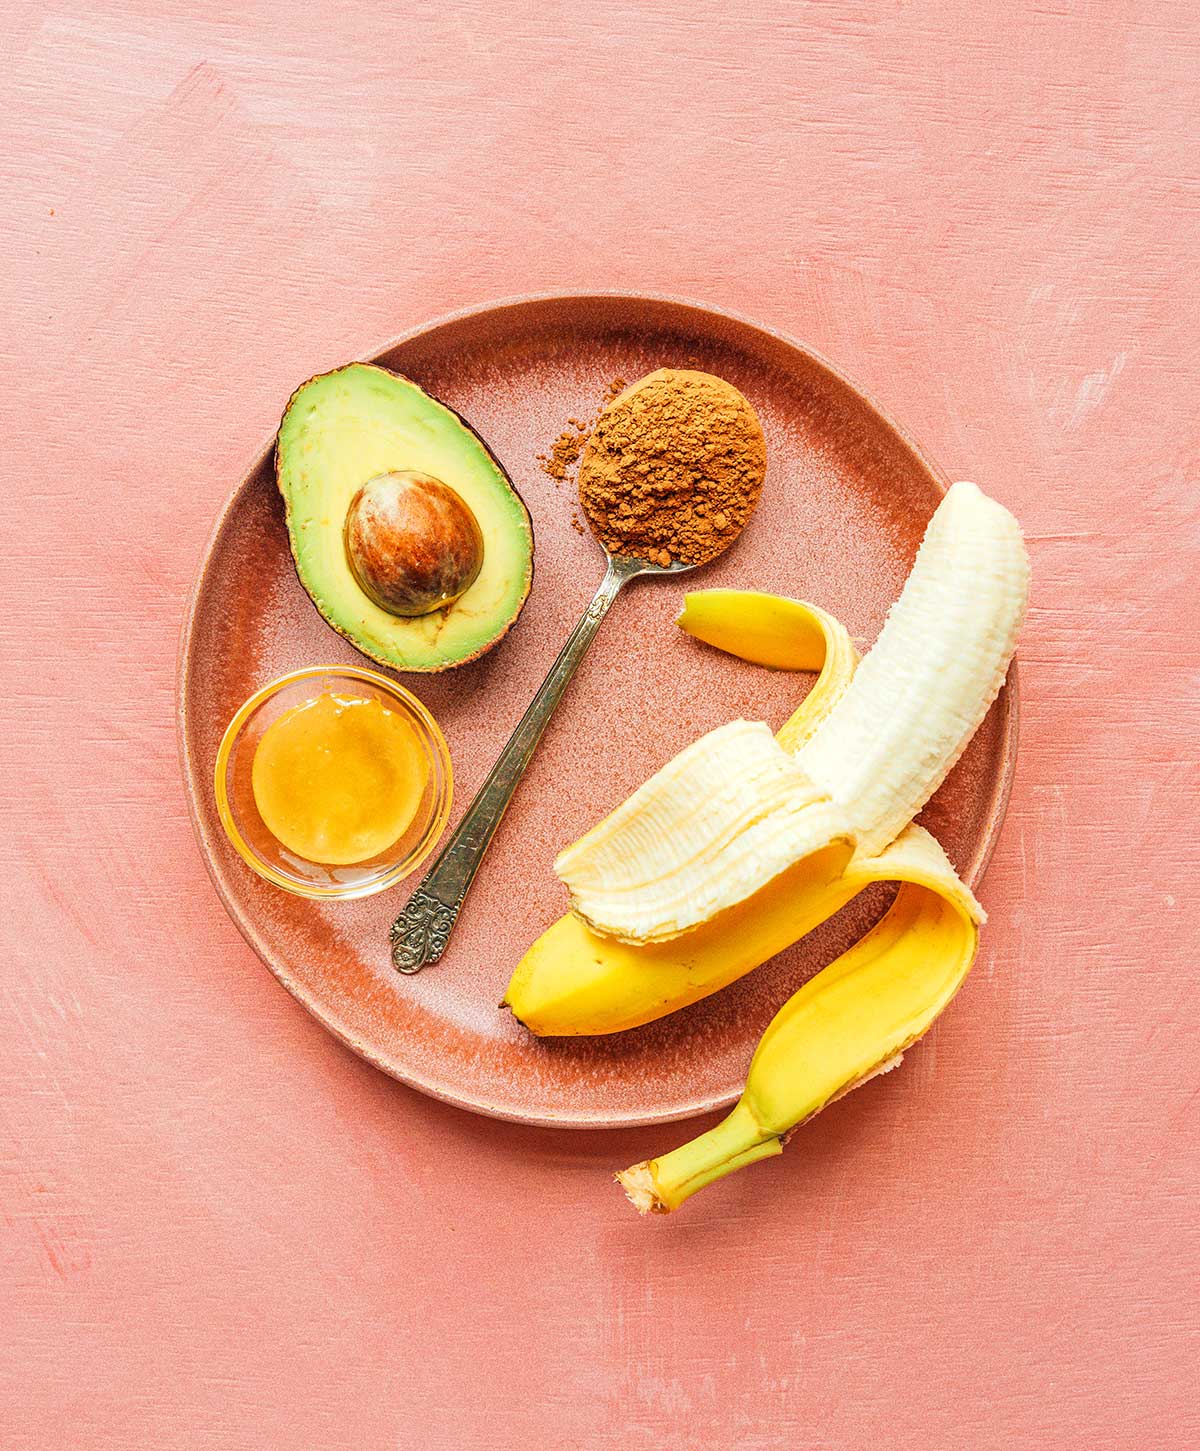 Honey, half of an avocado, a tablespoon of cocoa powder, and a peeled banana on a plate